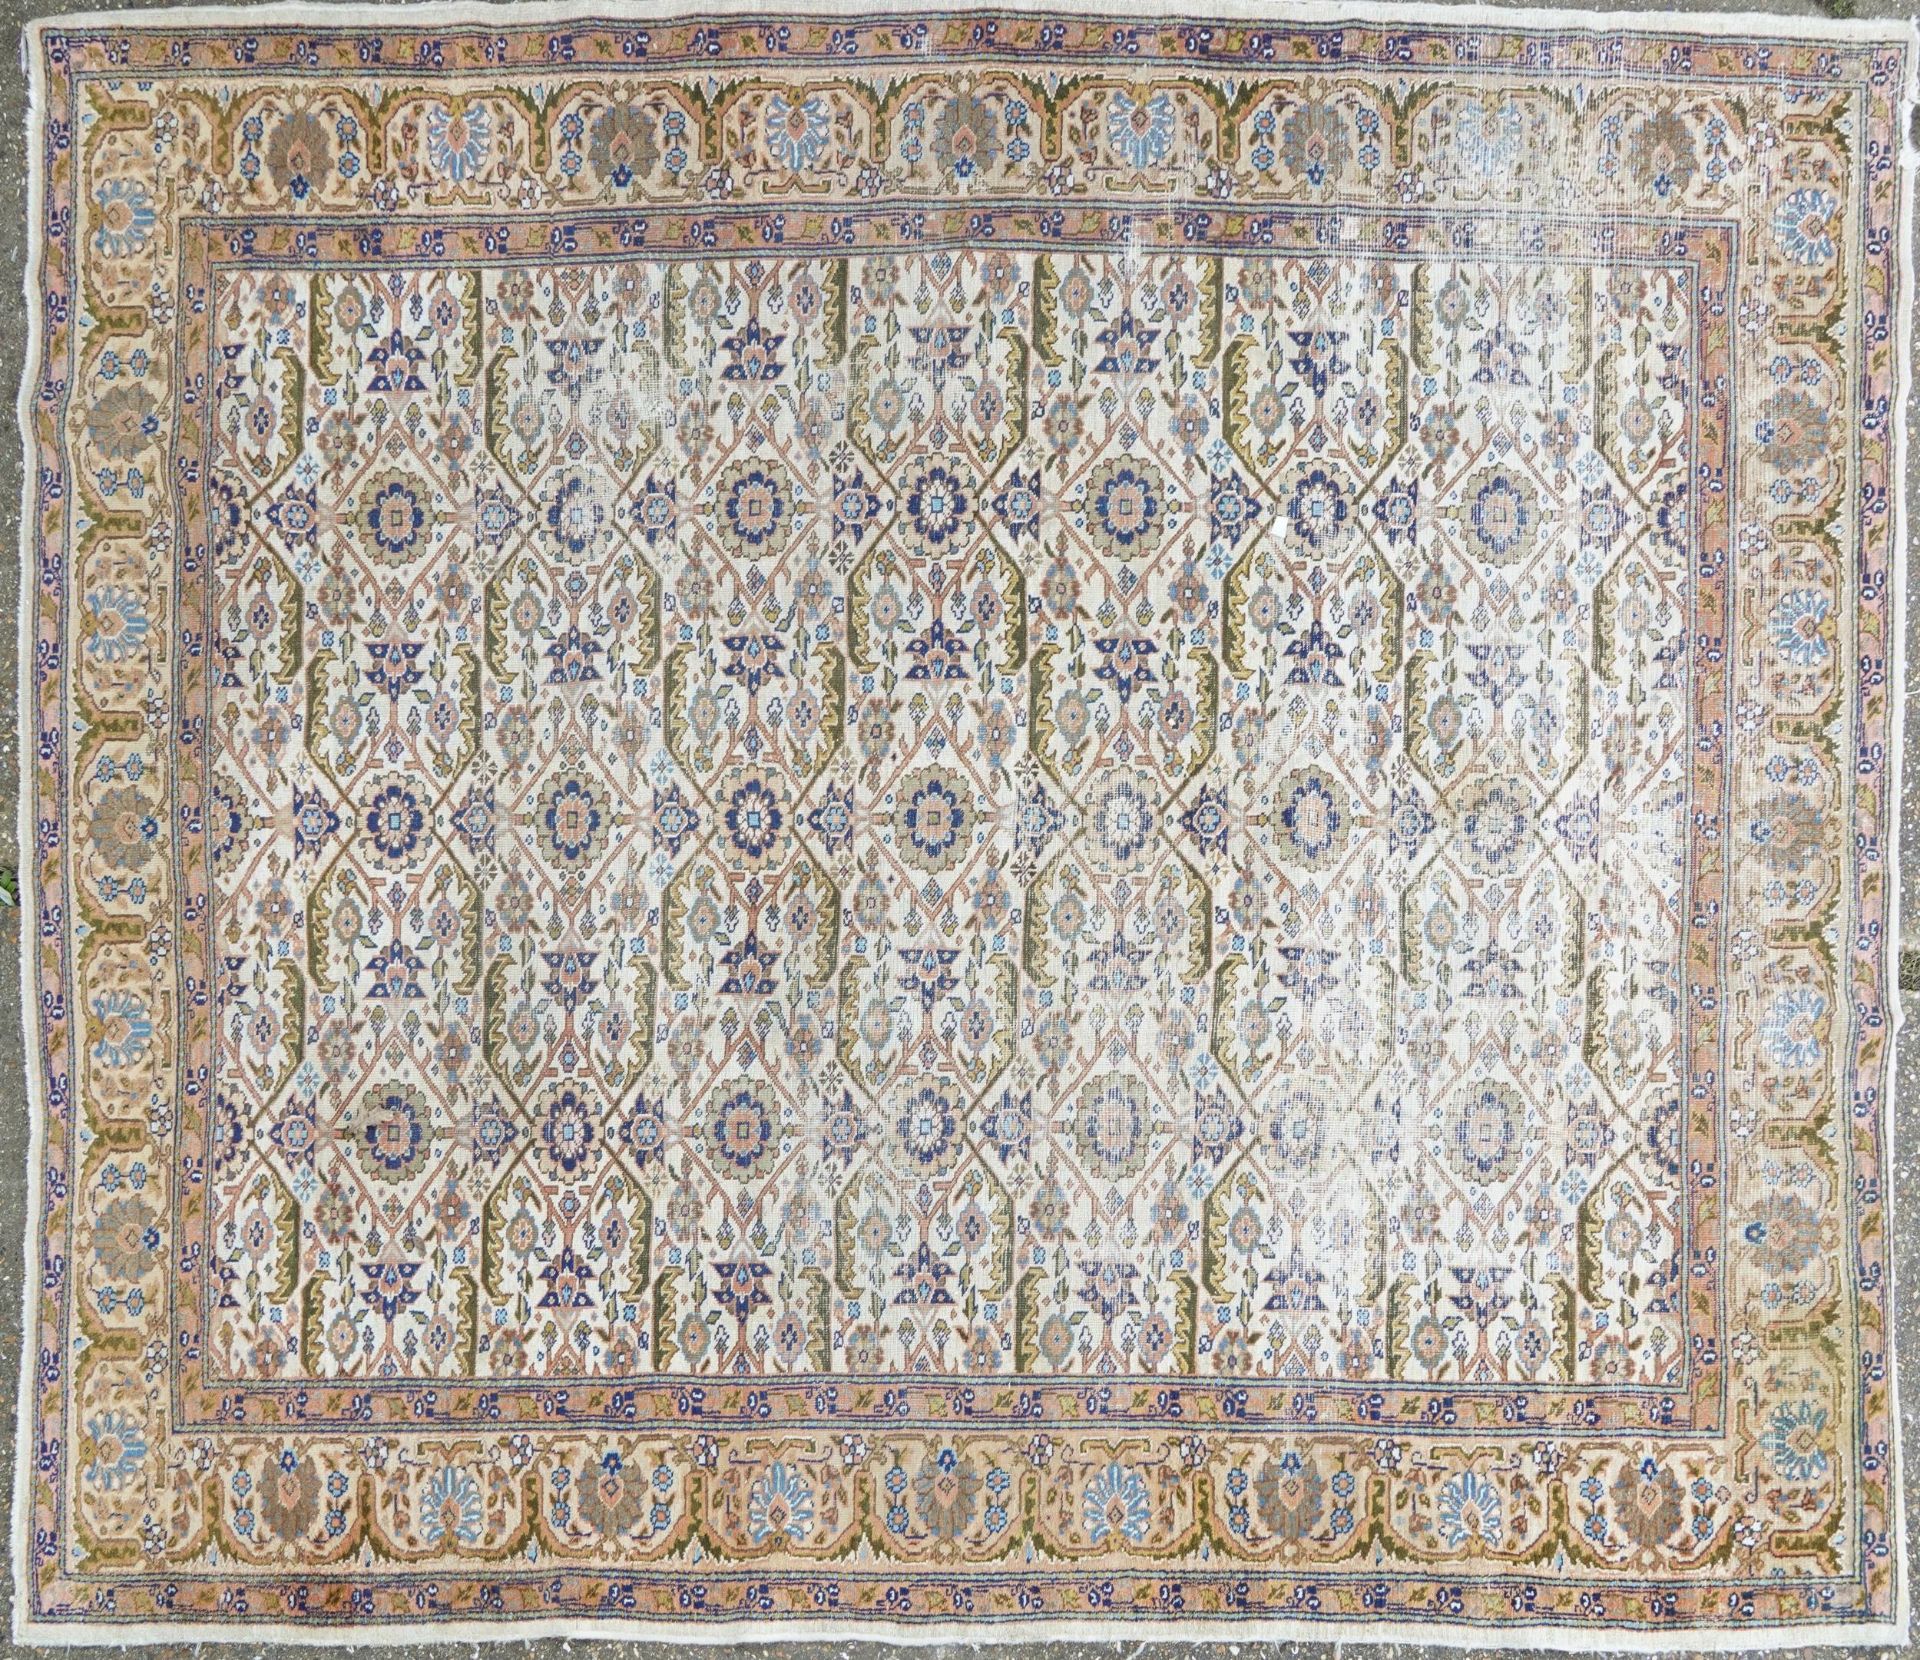 Rectangular Persian rug having an allover floral design within corresponding borders, 345cm x 255cm